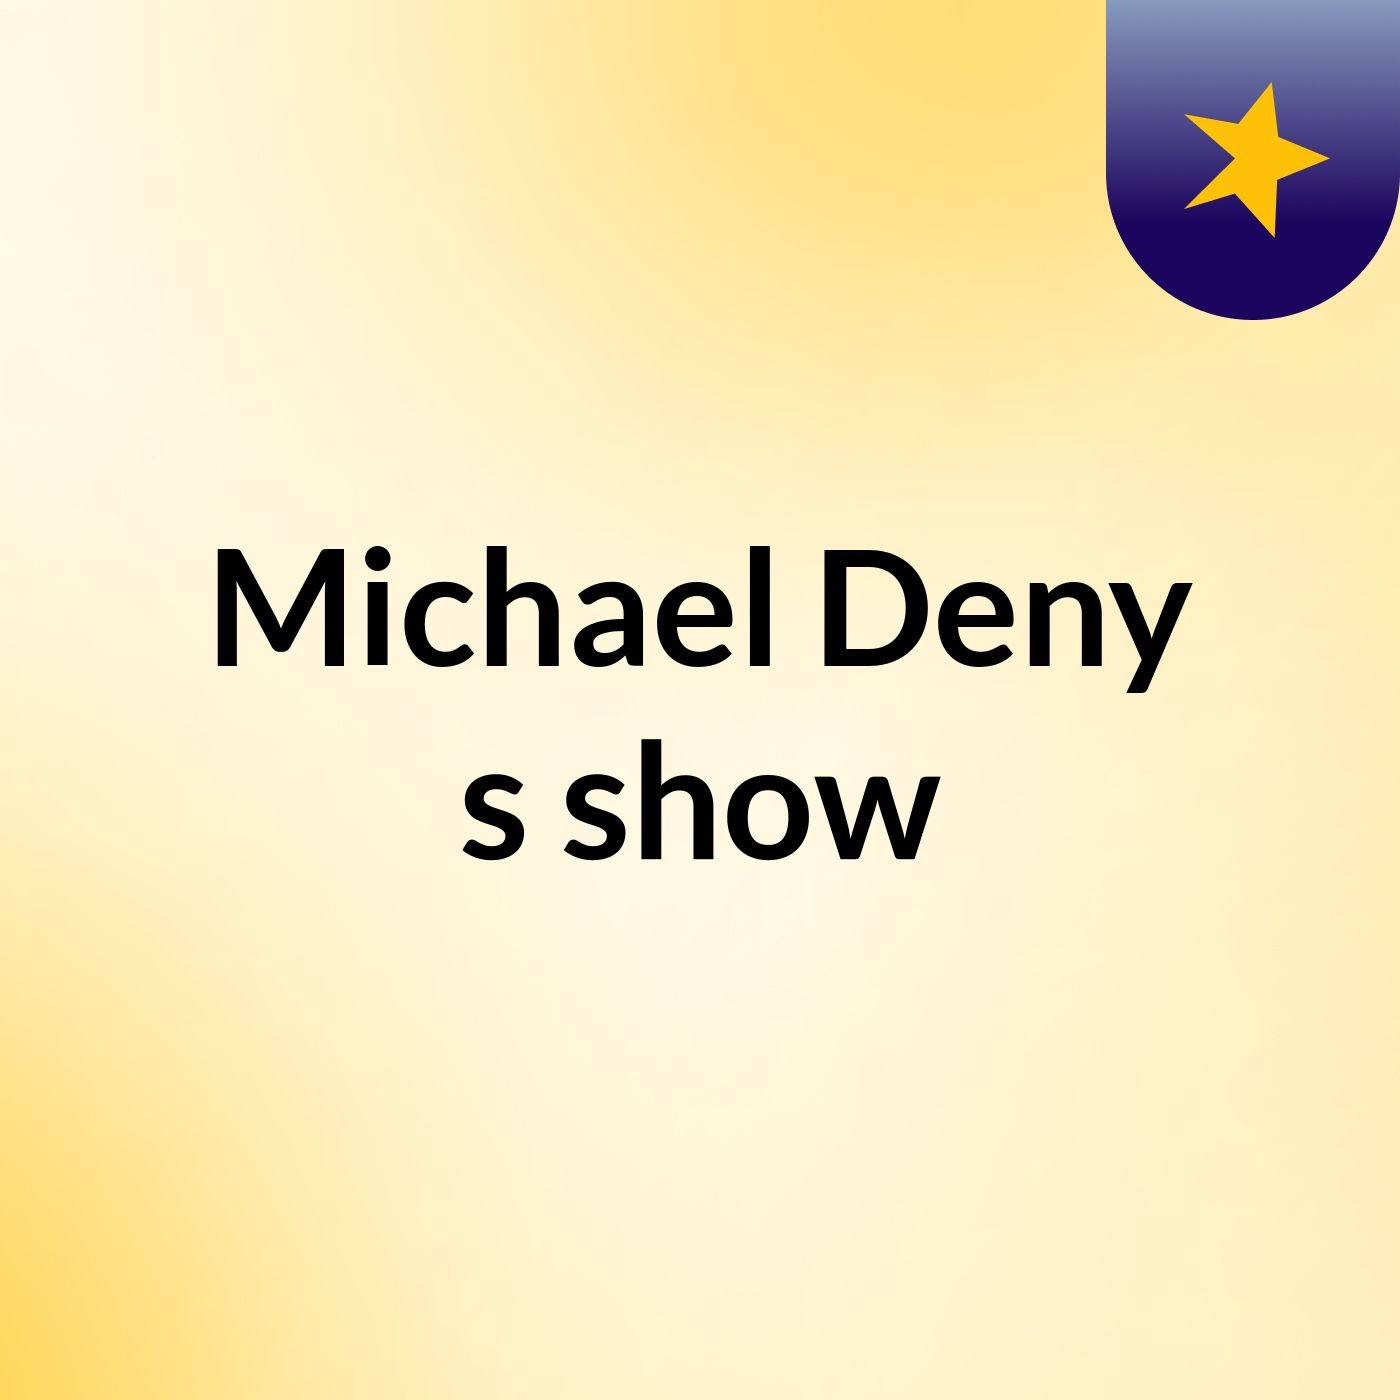 Michael Deny's show